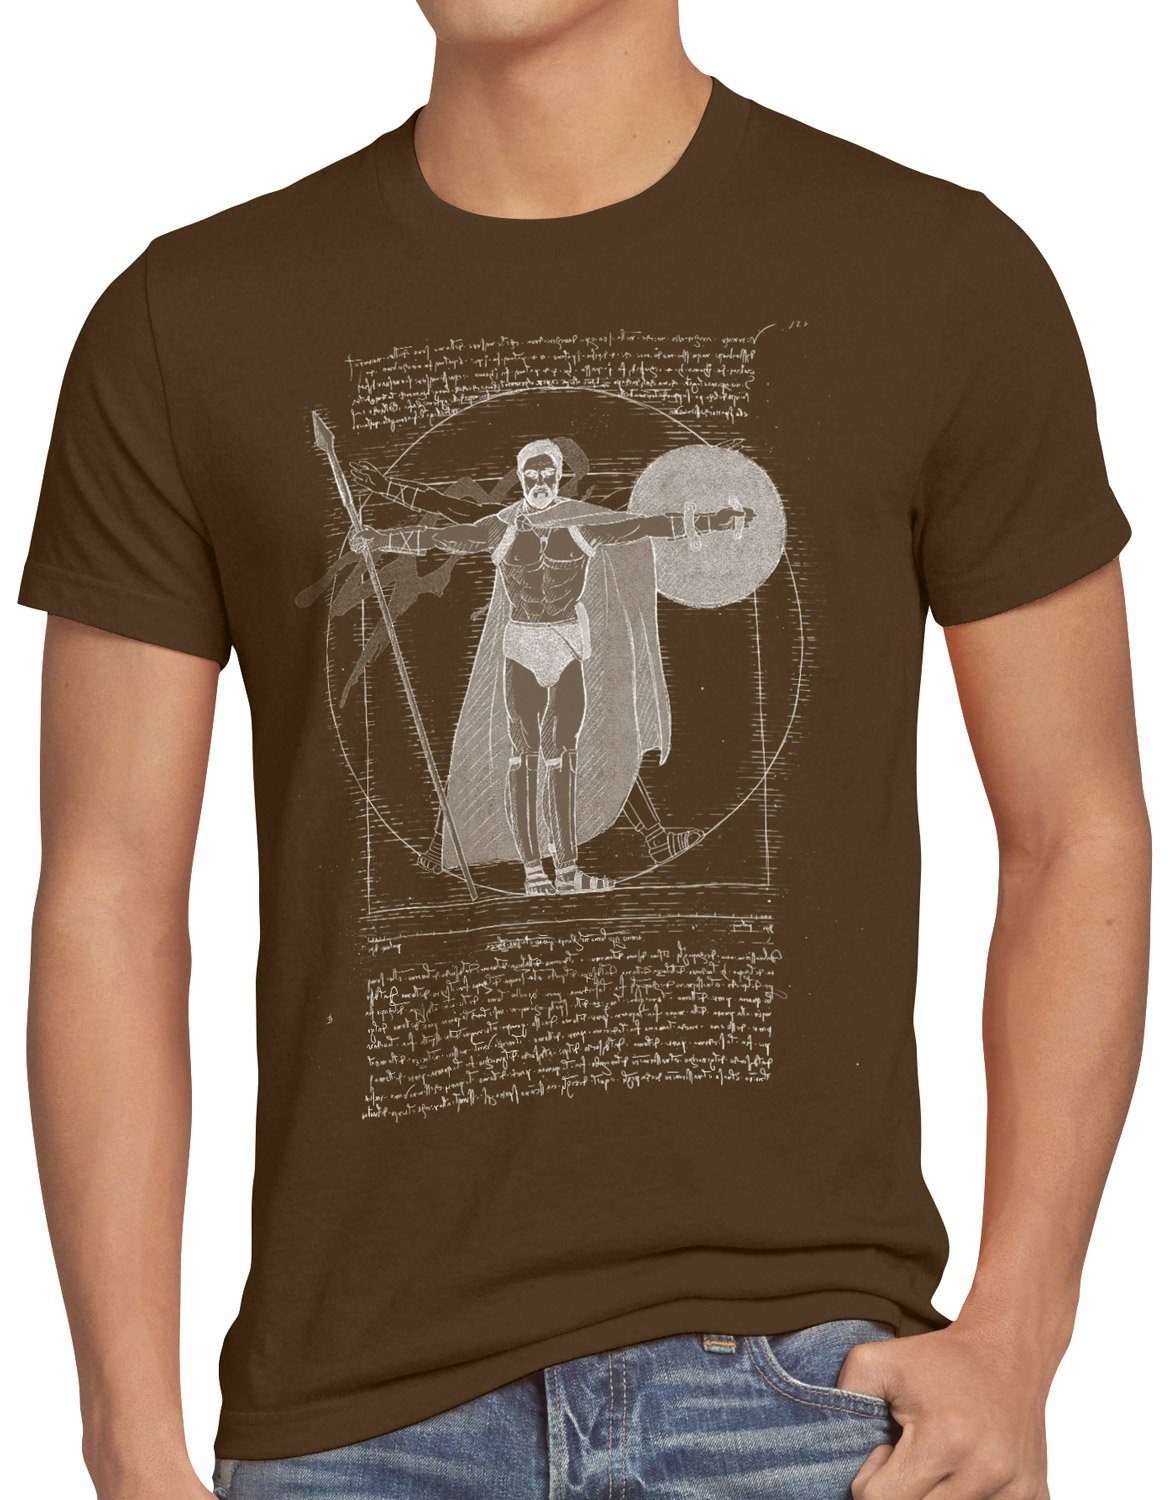 Vitruvianischer Herren kämpfer Print-Shirt braun T-Shirt style3 300 dreihundert antiker Spartaner